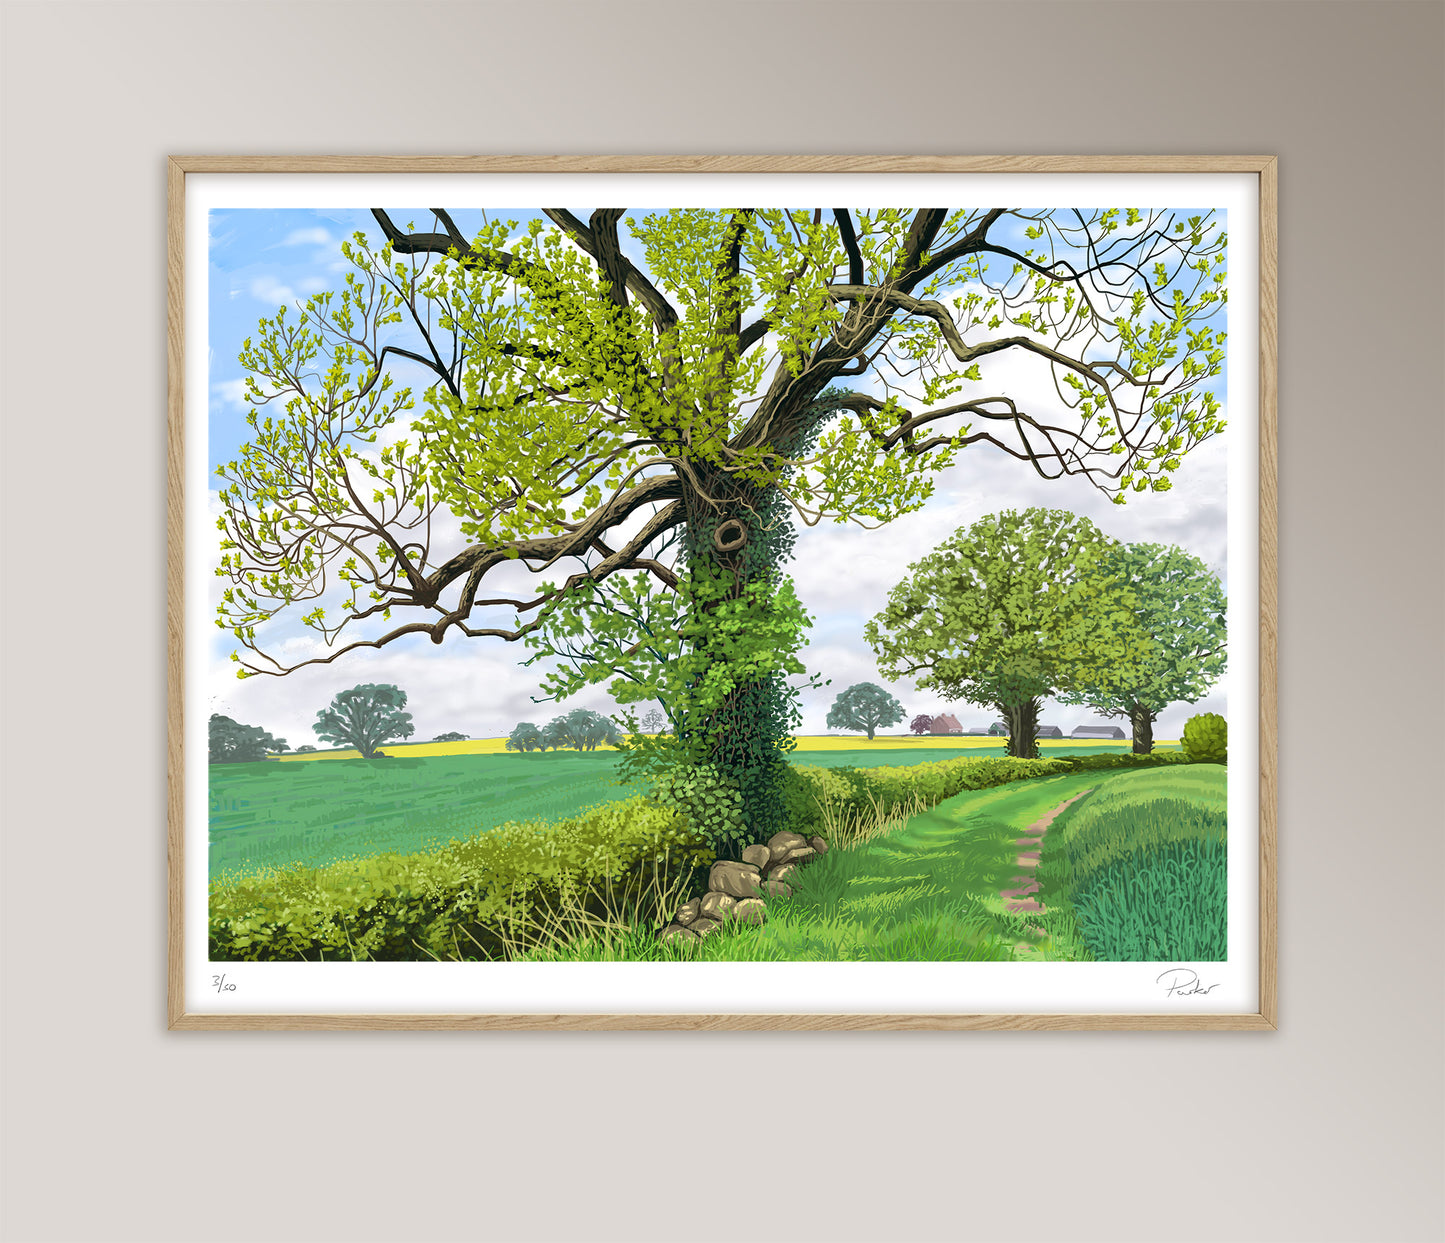 Framed image of May Tree, Farlington in an oak frame. Digital iPad drawing by Jeff Parker